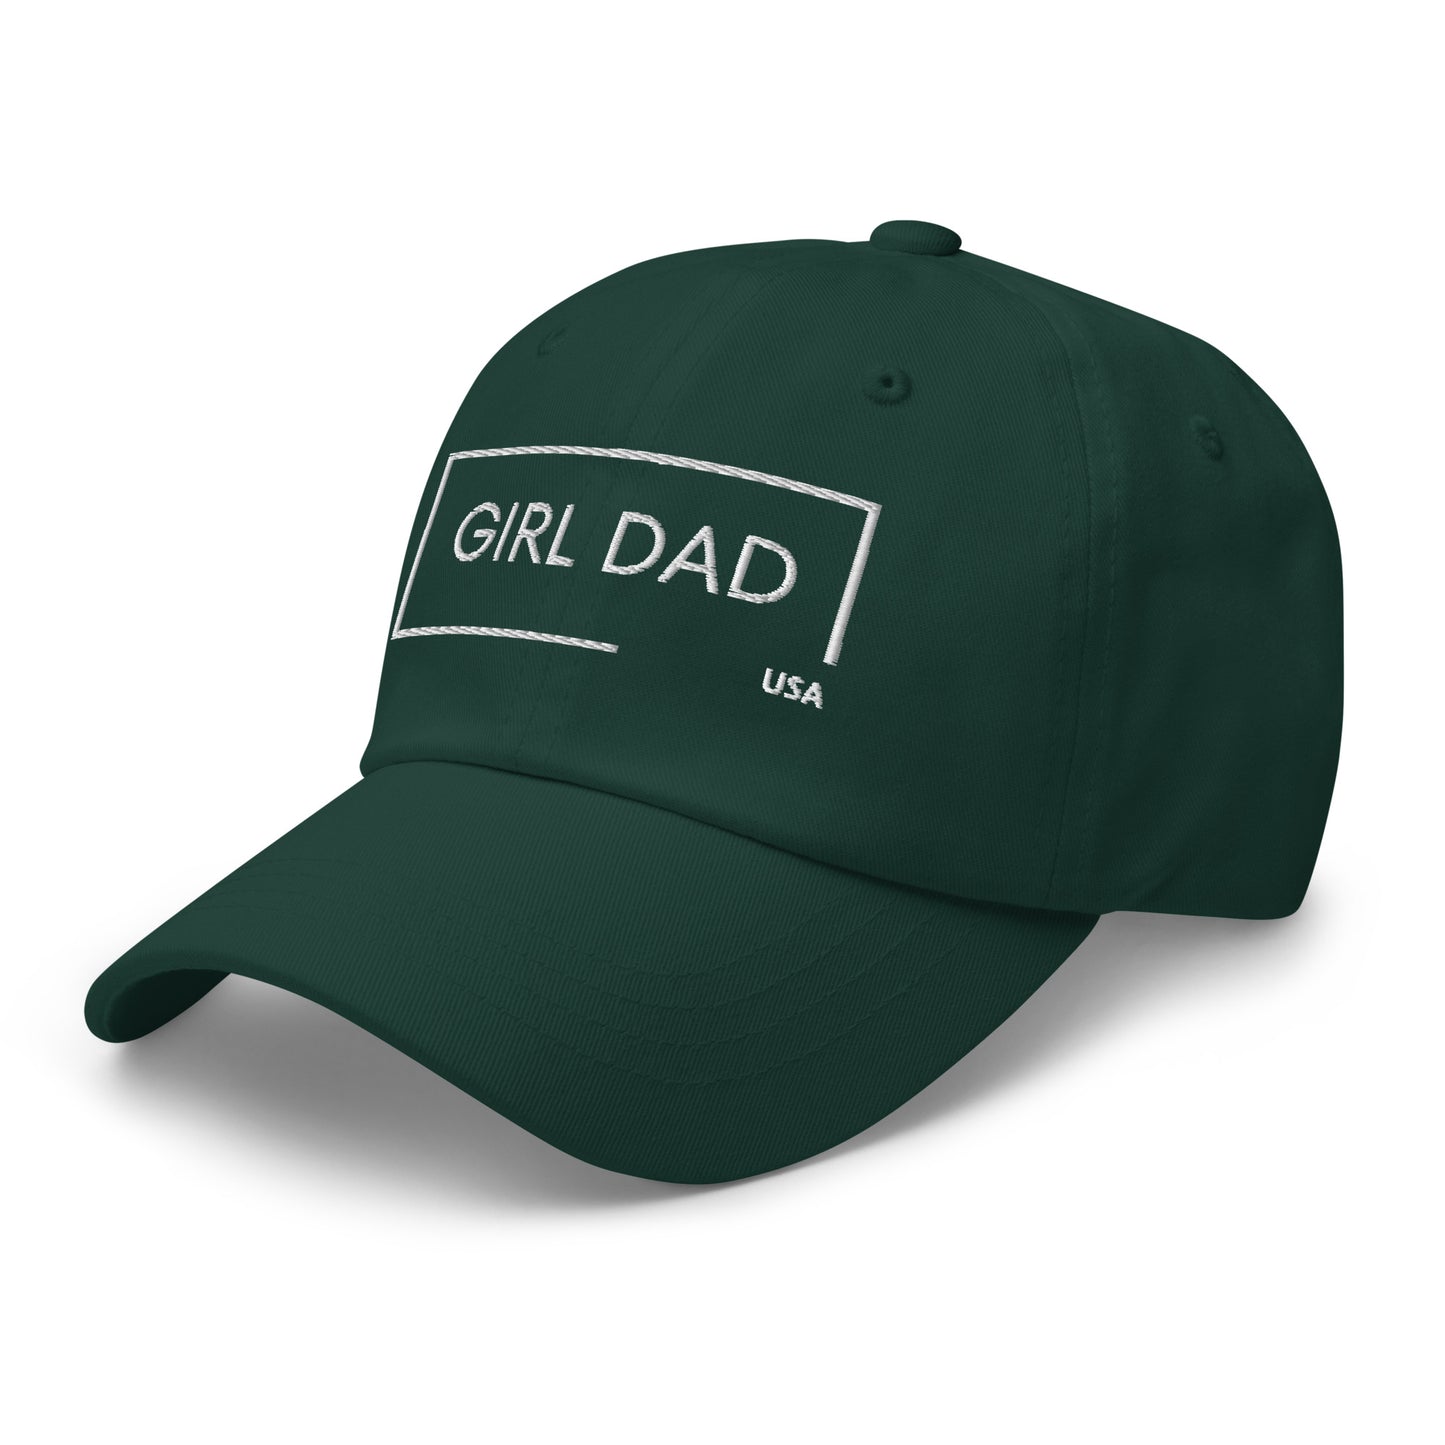 Girl Dad USA - Classic Dad Hat